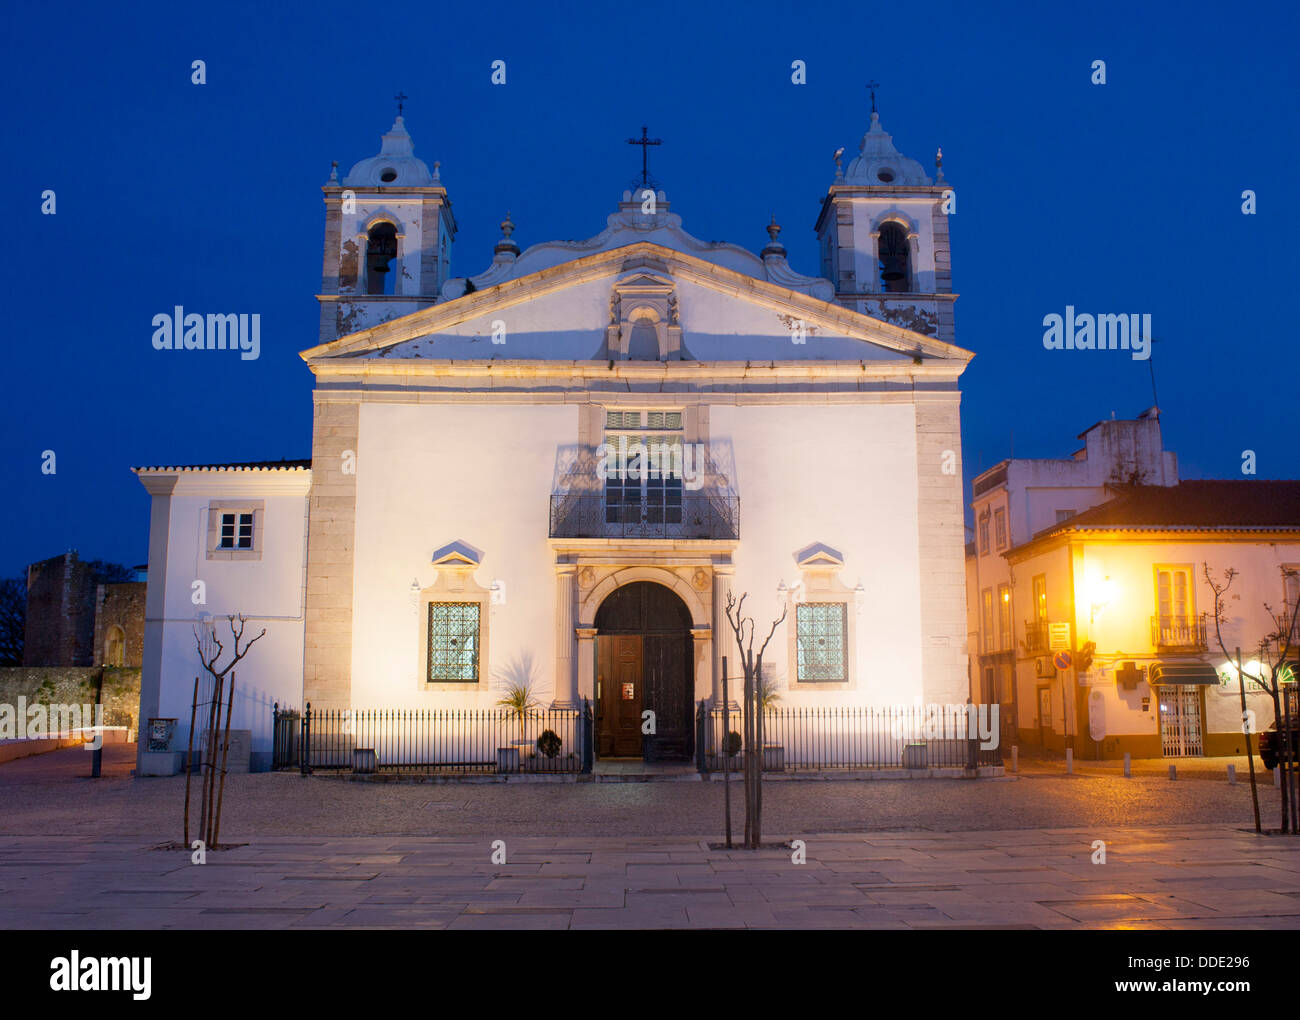 Igreja de Santa Maria di notte Praca Infante Dom Henrique Lagos Algarve Portogallo Foto Stock